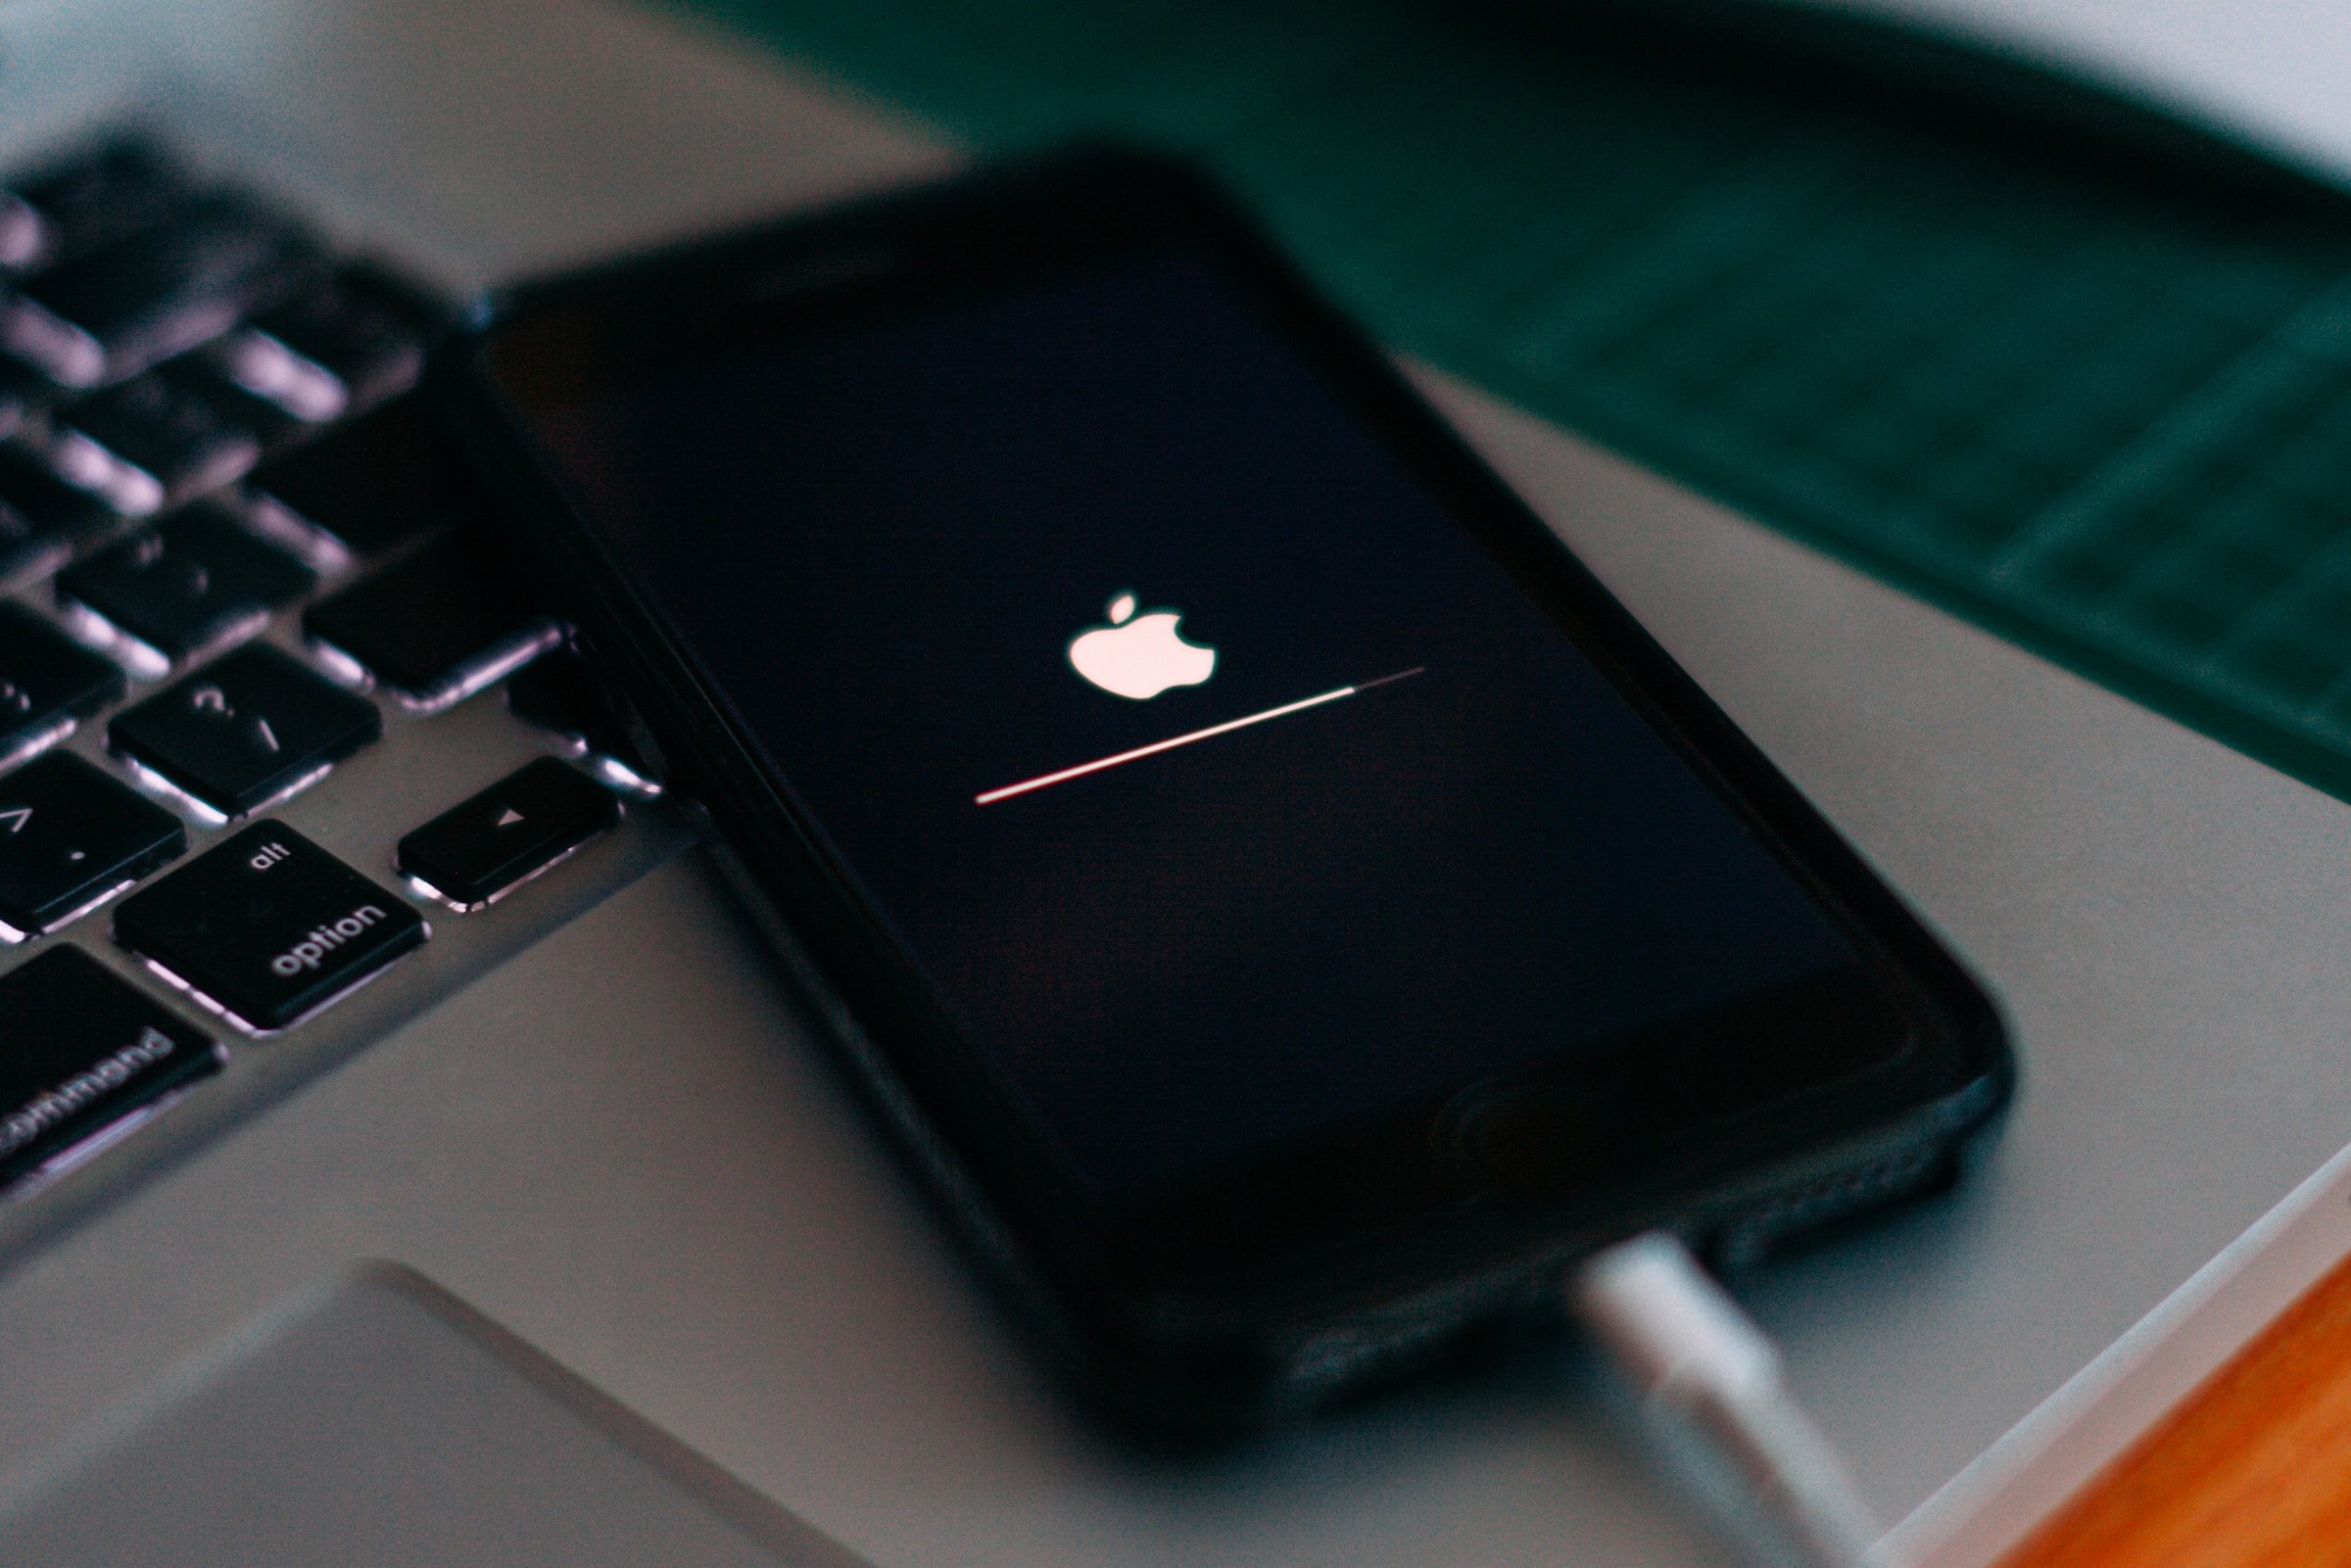 puls iphone stuck on apple logo updates.jpg?width=2400&name=puls iphone stuck on apple logo updates